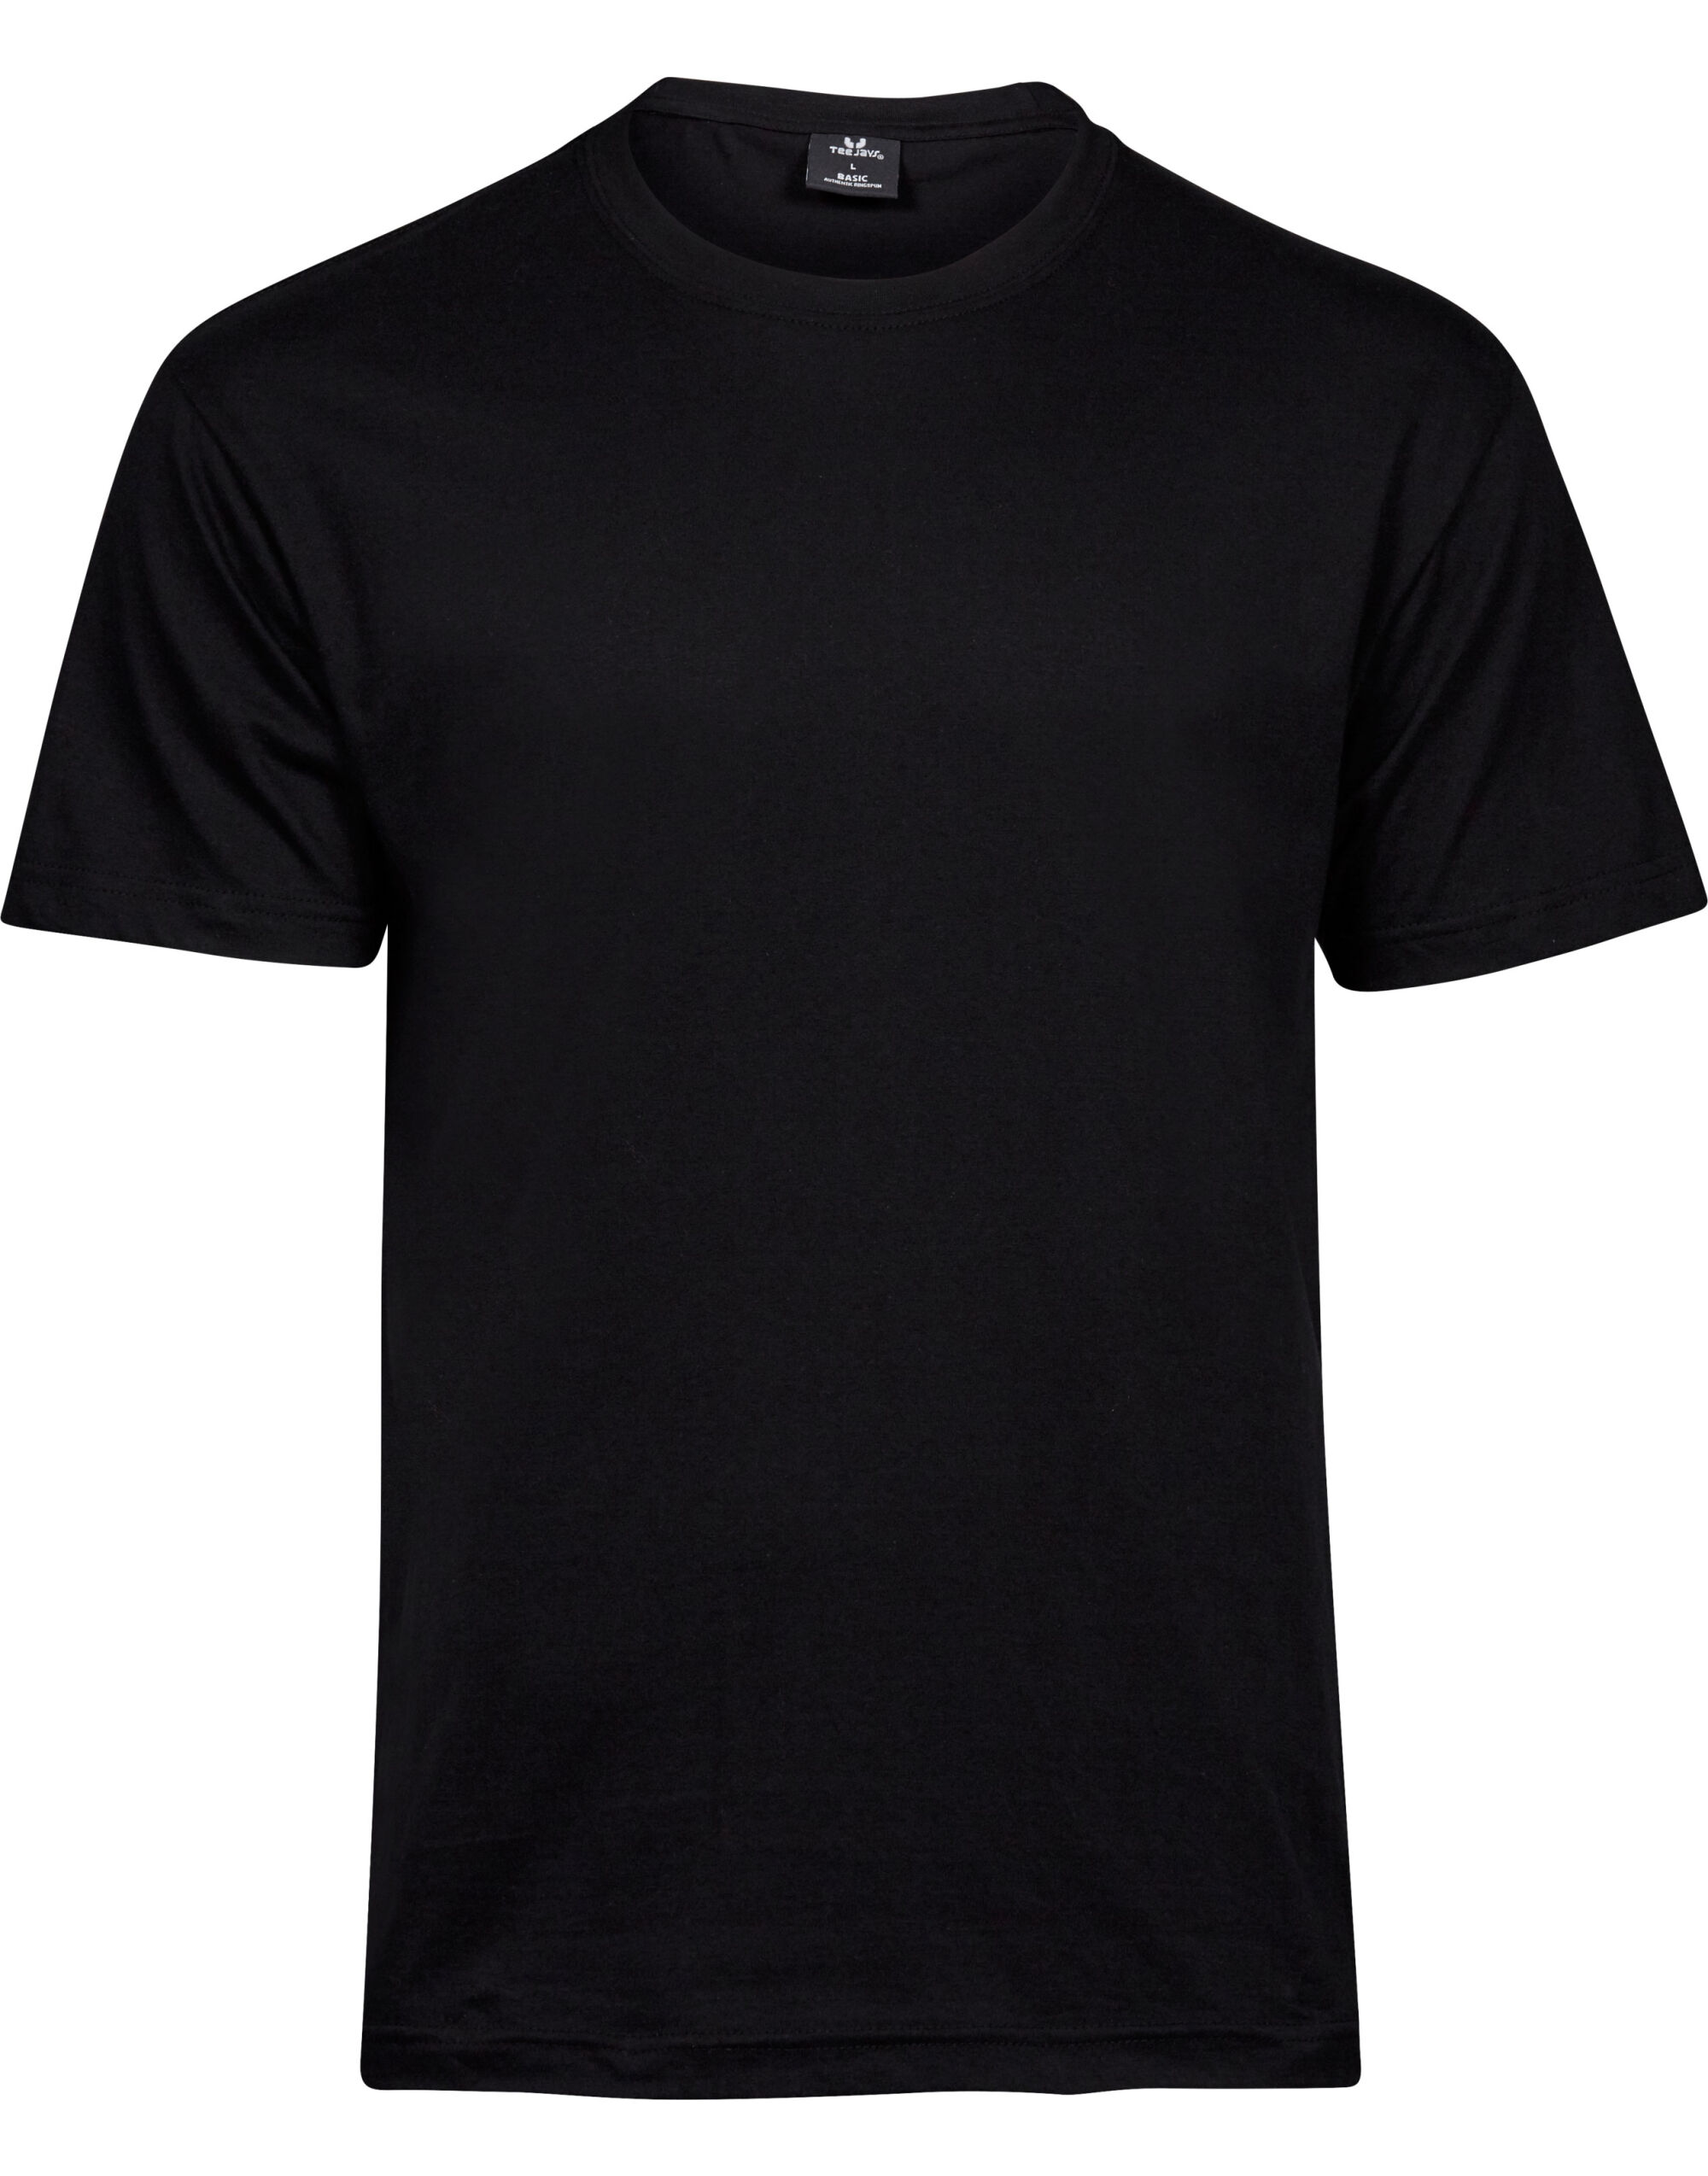 Tee Jays 1000 Men's T-Shirt 150g